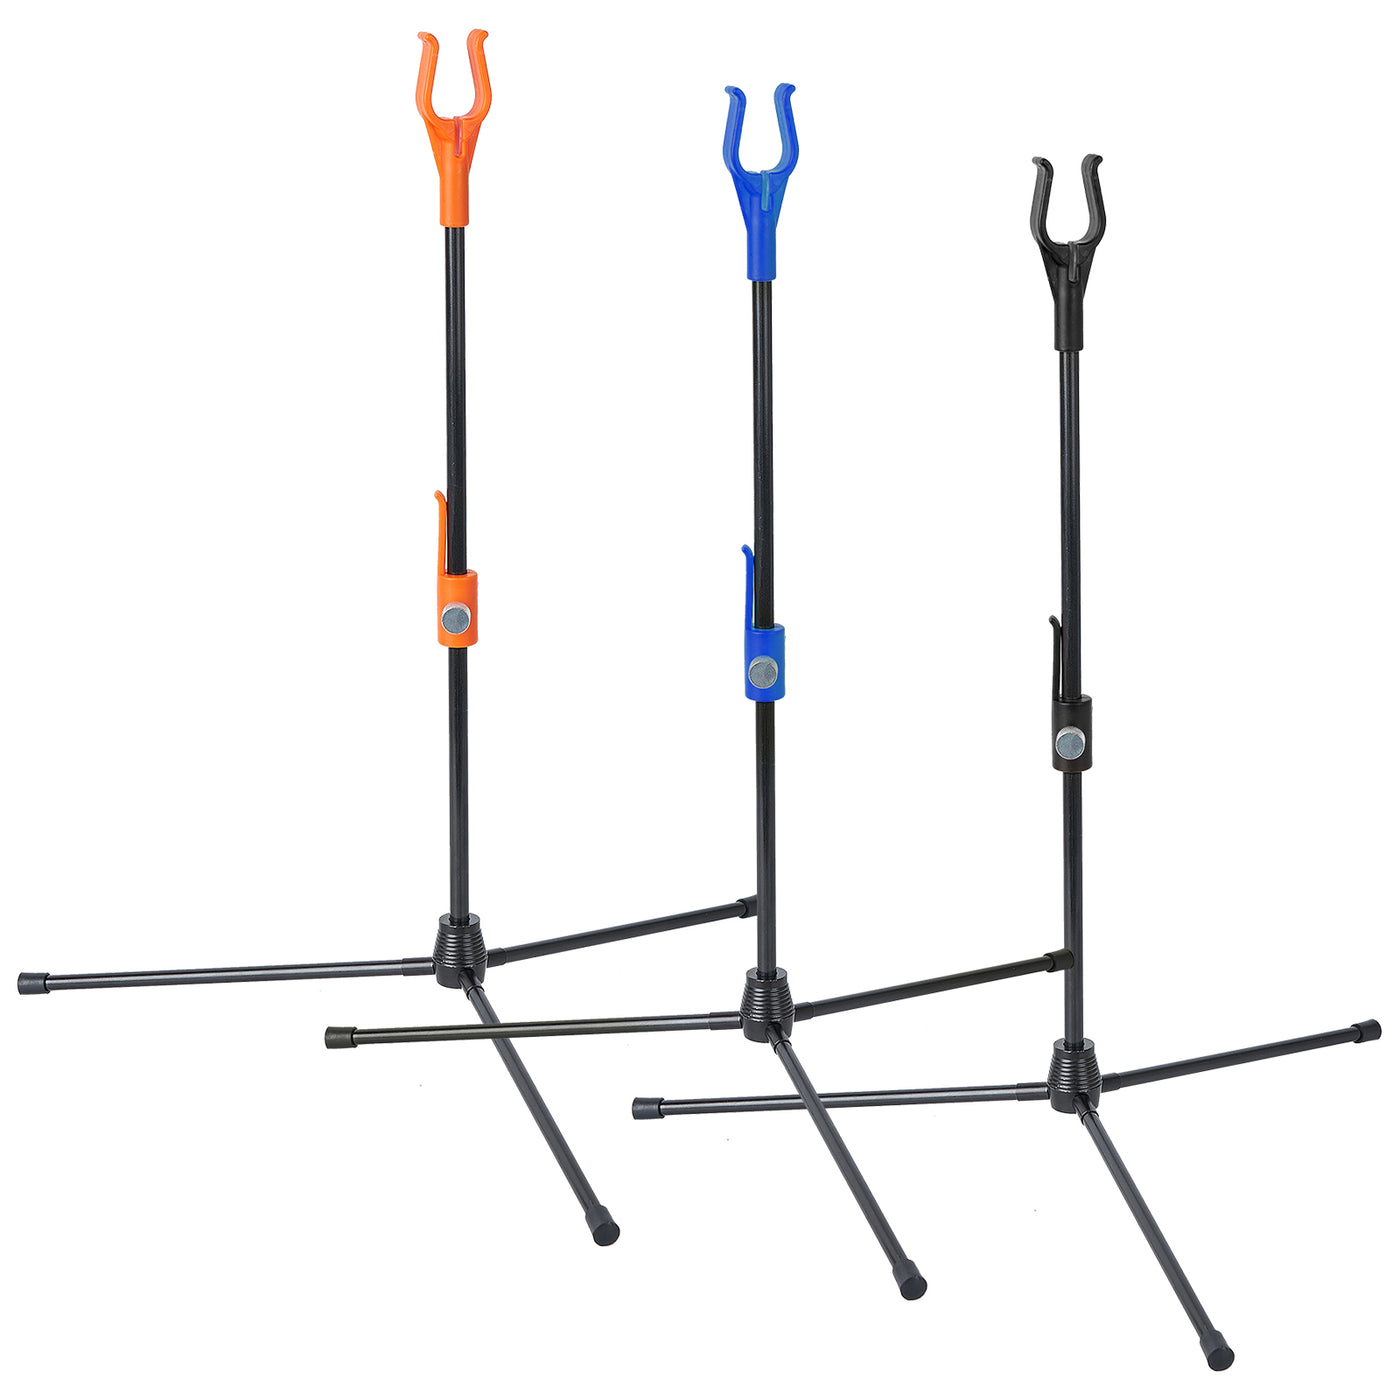 ABS Archery Bow Stand Rack Black/Blue/Orange Recreational Target Shooting